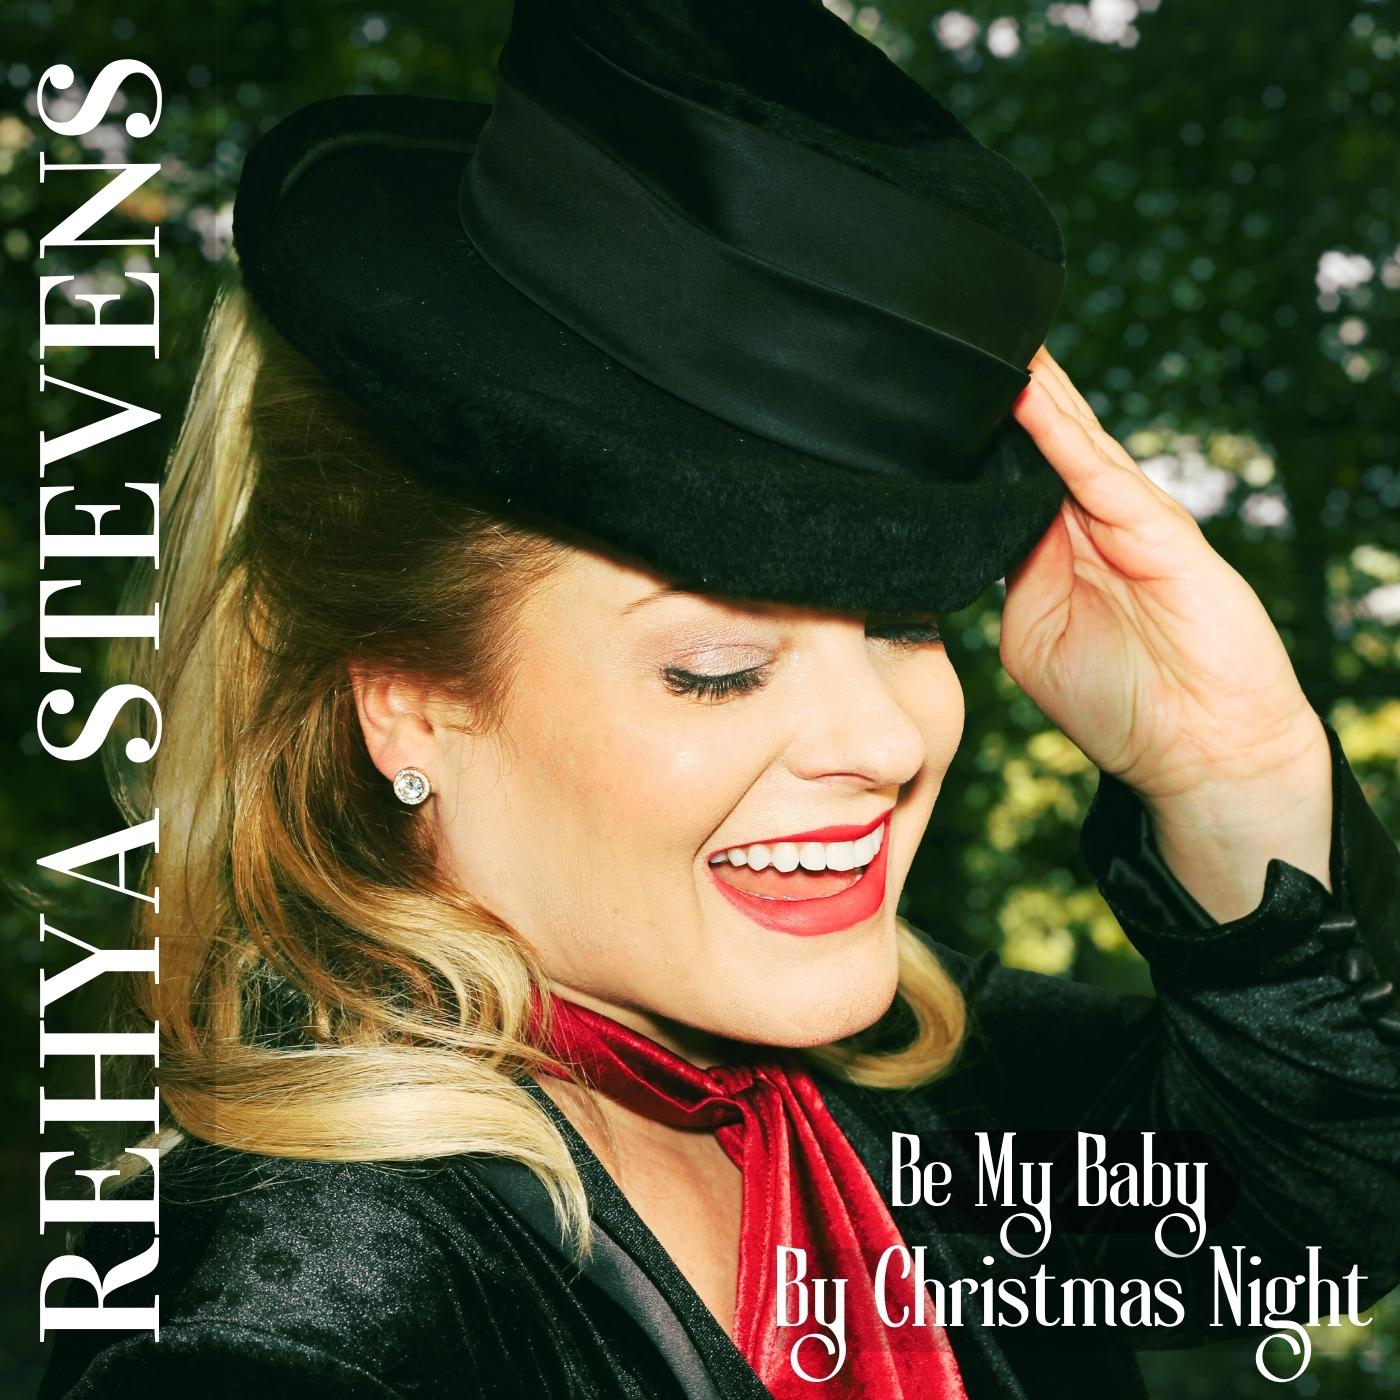 Rehya Stevens – “Be My Baby By Christmas Night”